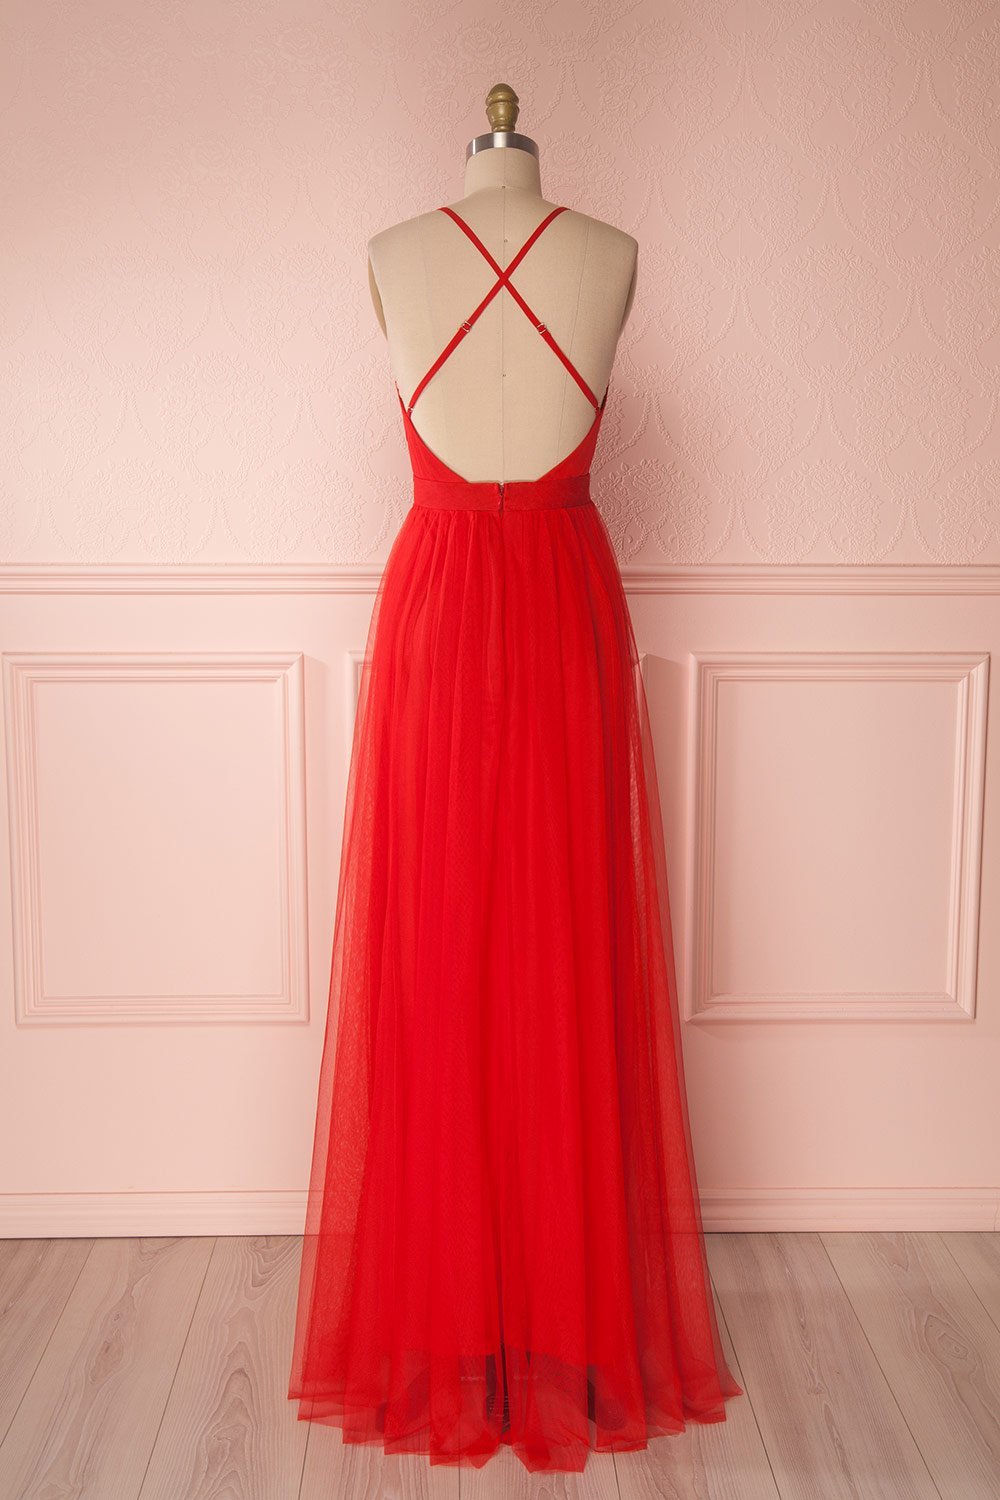 Aliki Red Mesh Plunging Neckline Maxi Dress | Boutique 1861 6